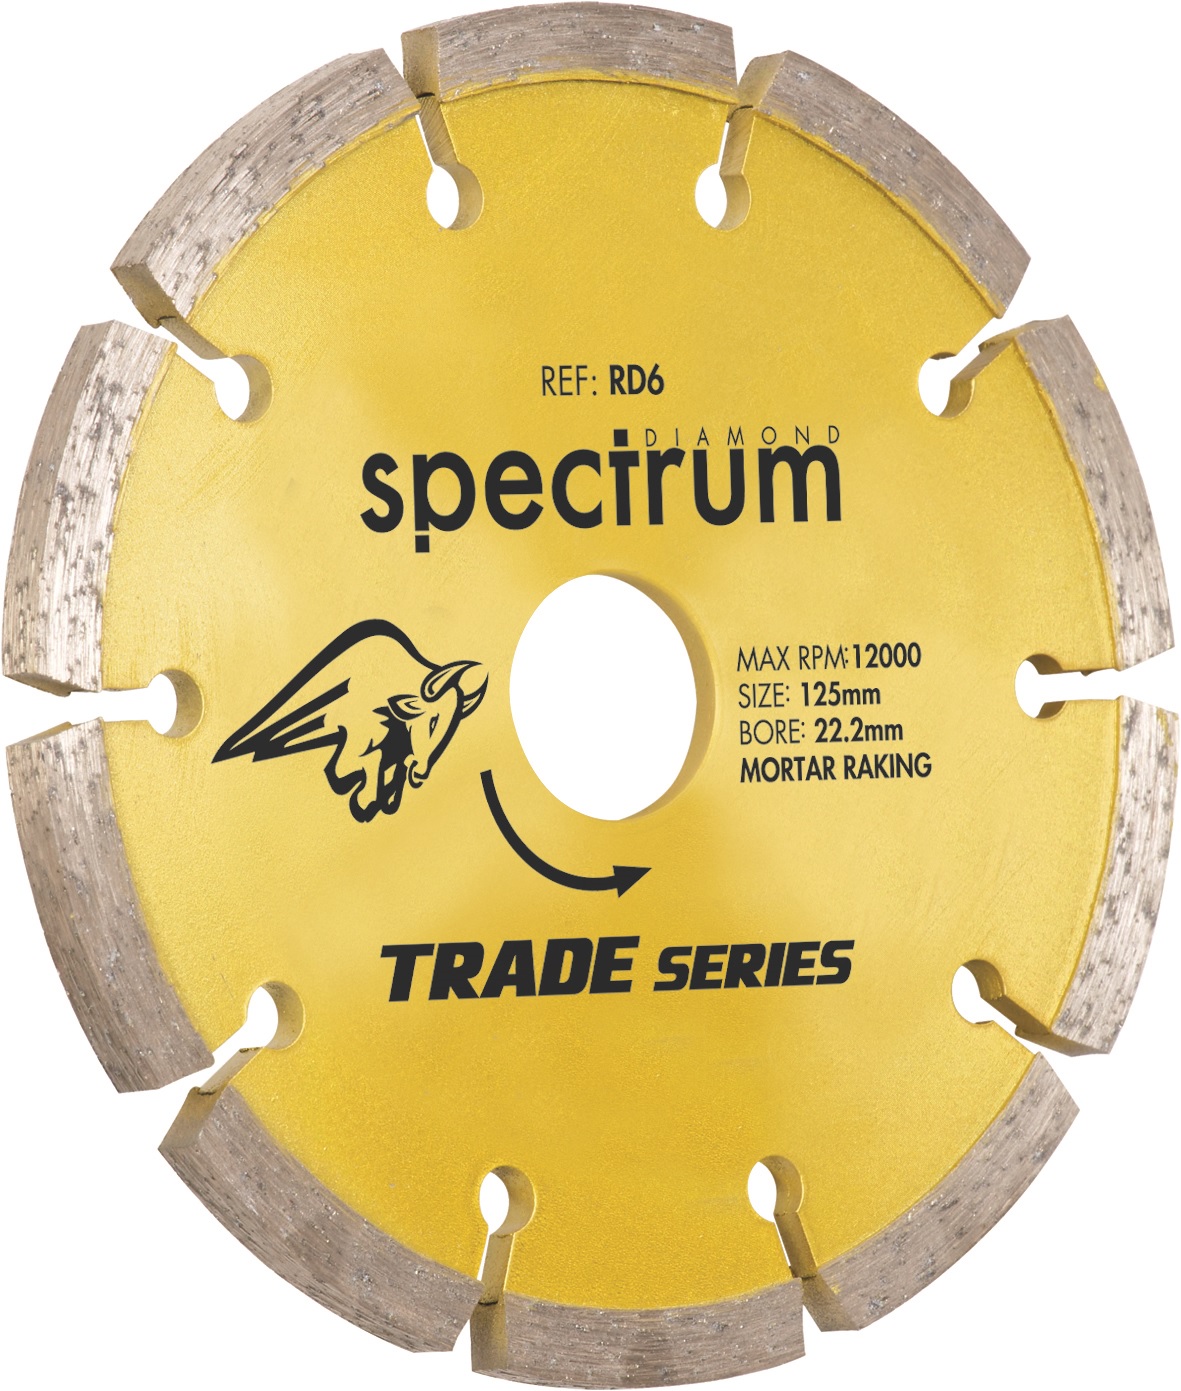 Spectrum Trade Mortar Rake 115mm Diamond Blade